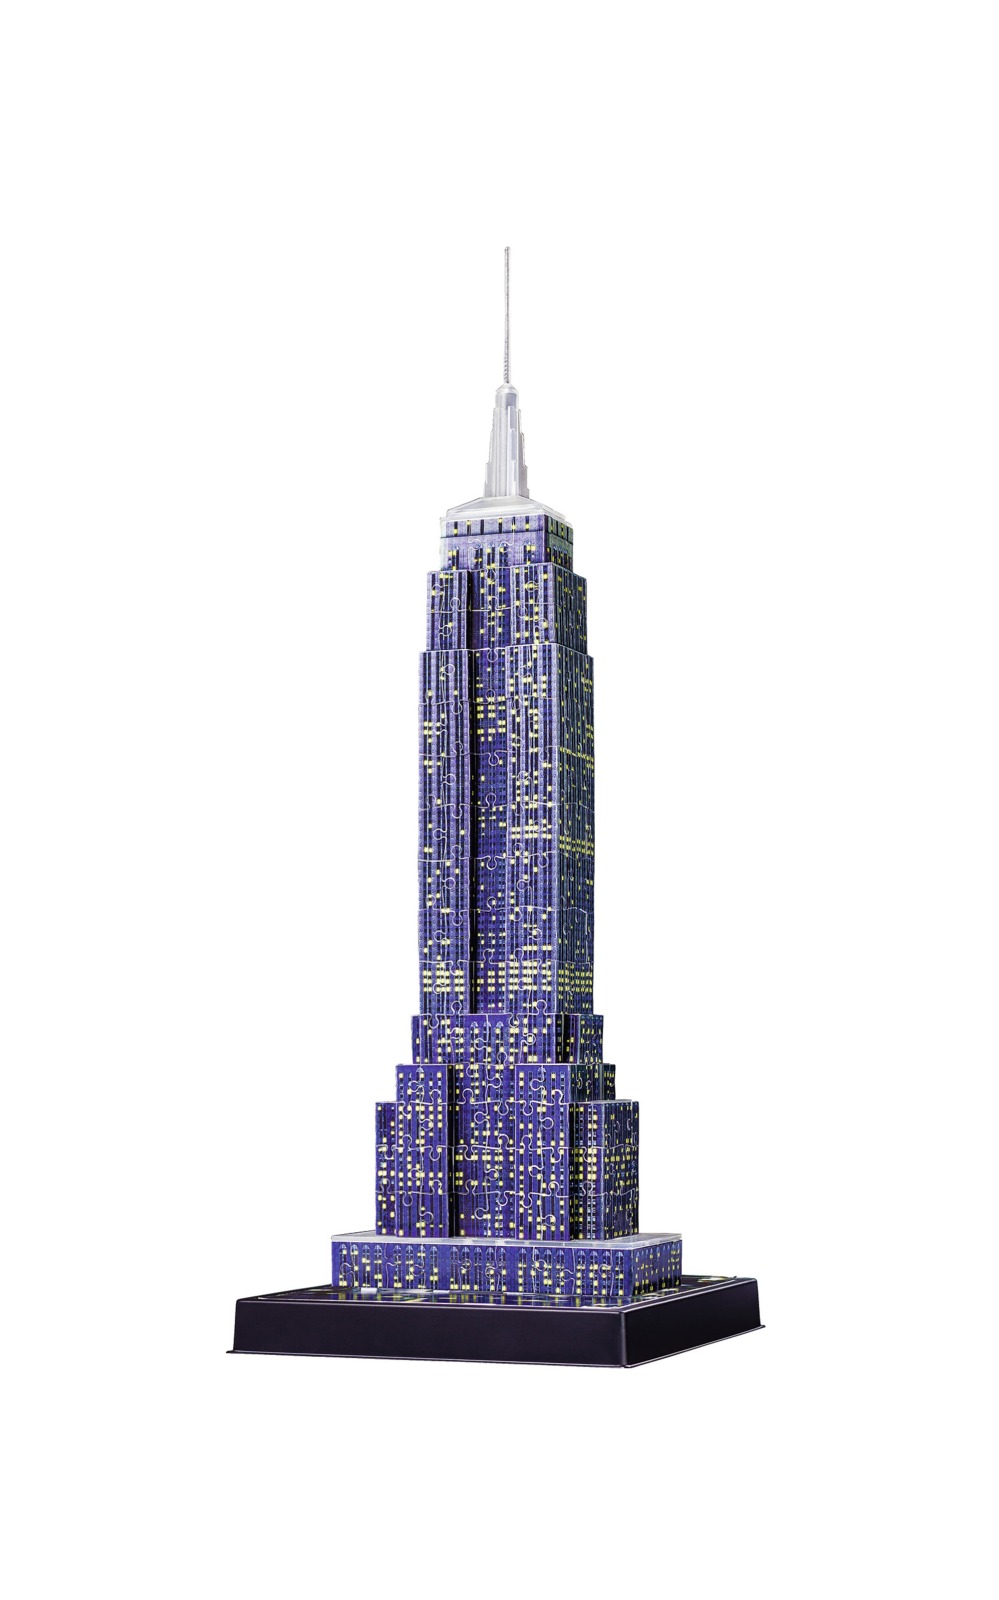 Ravensburger - 3d puzzle empire state building night edition, new york, 216 pezzi, 10+ anni - RAVENSBURGER 3D PUZZLE